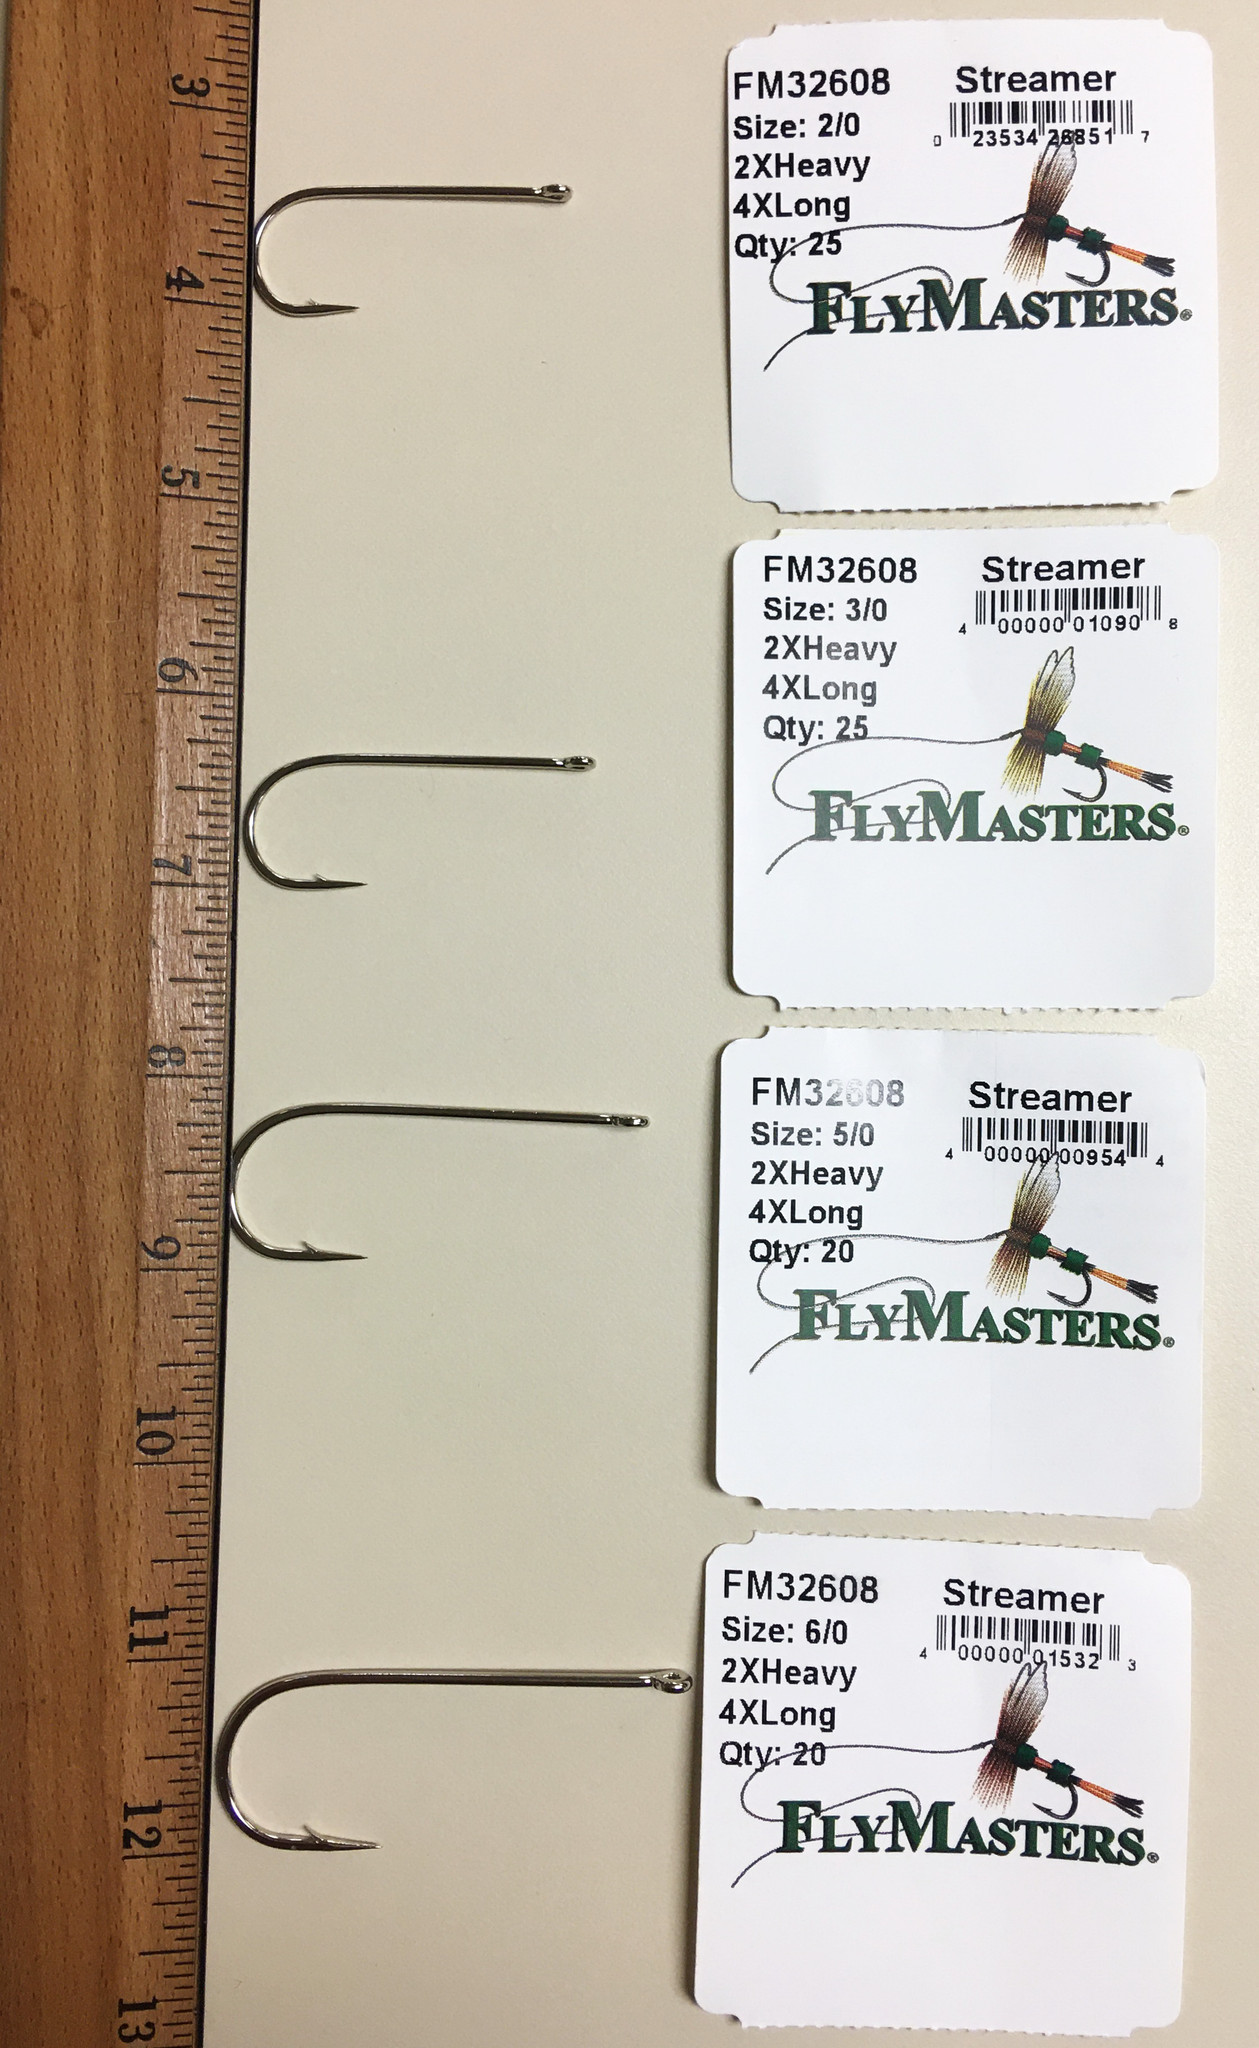 Mustad Barbless Streamer Fly Hook, Size 6